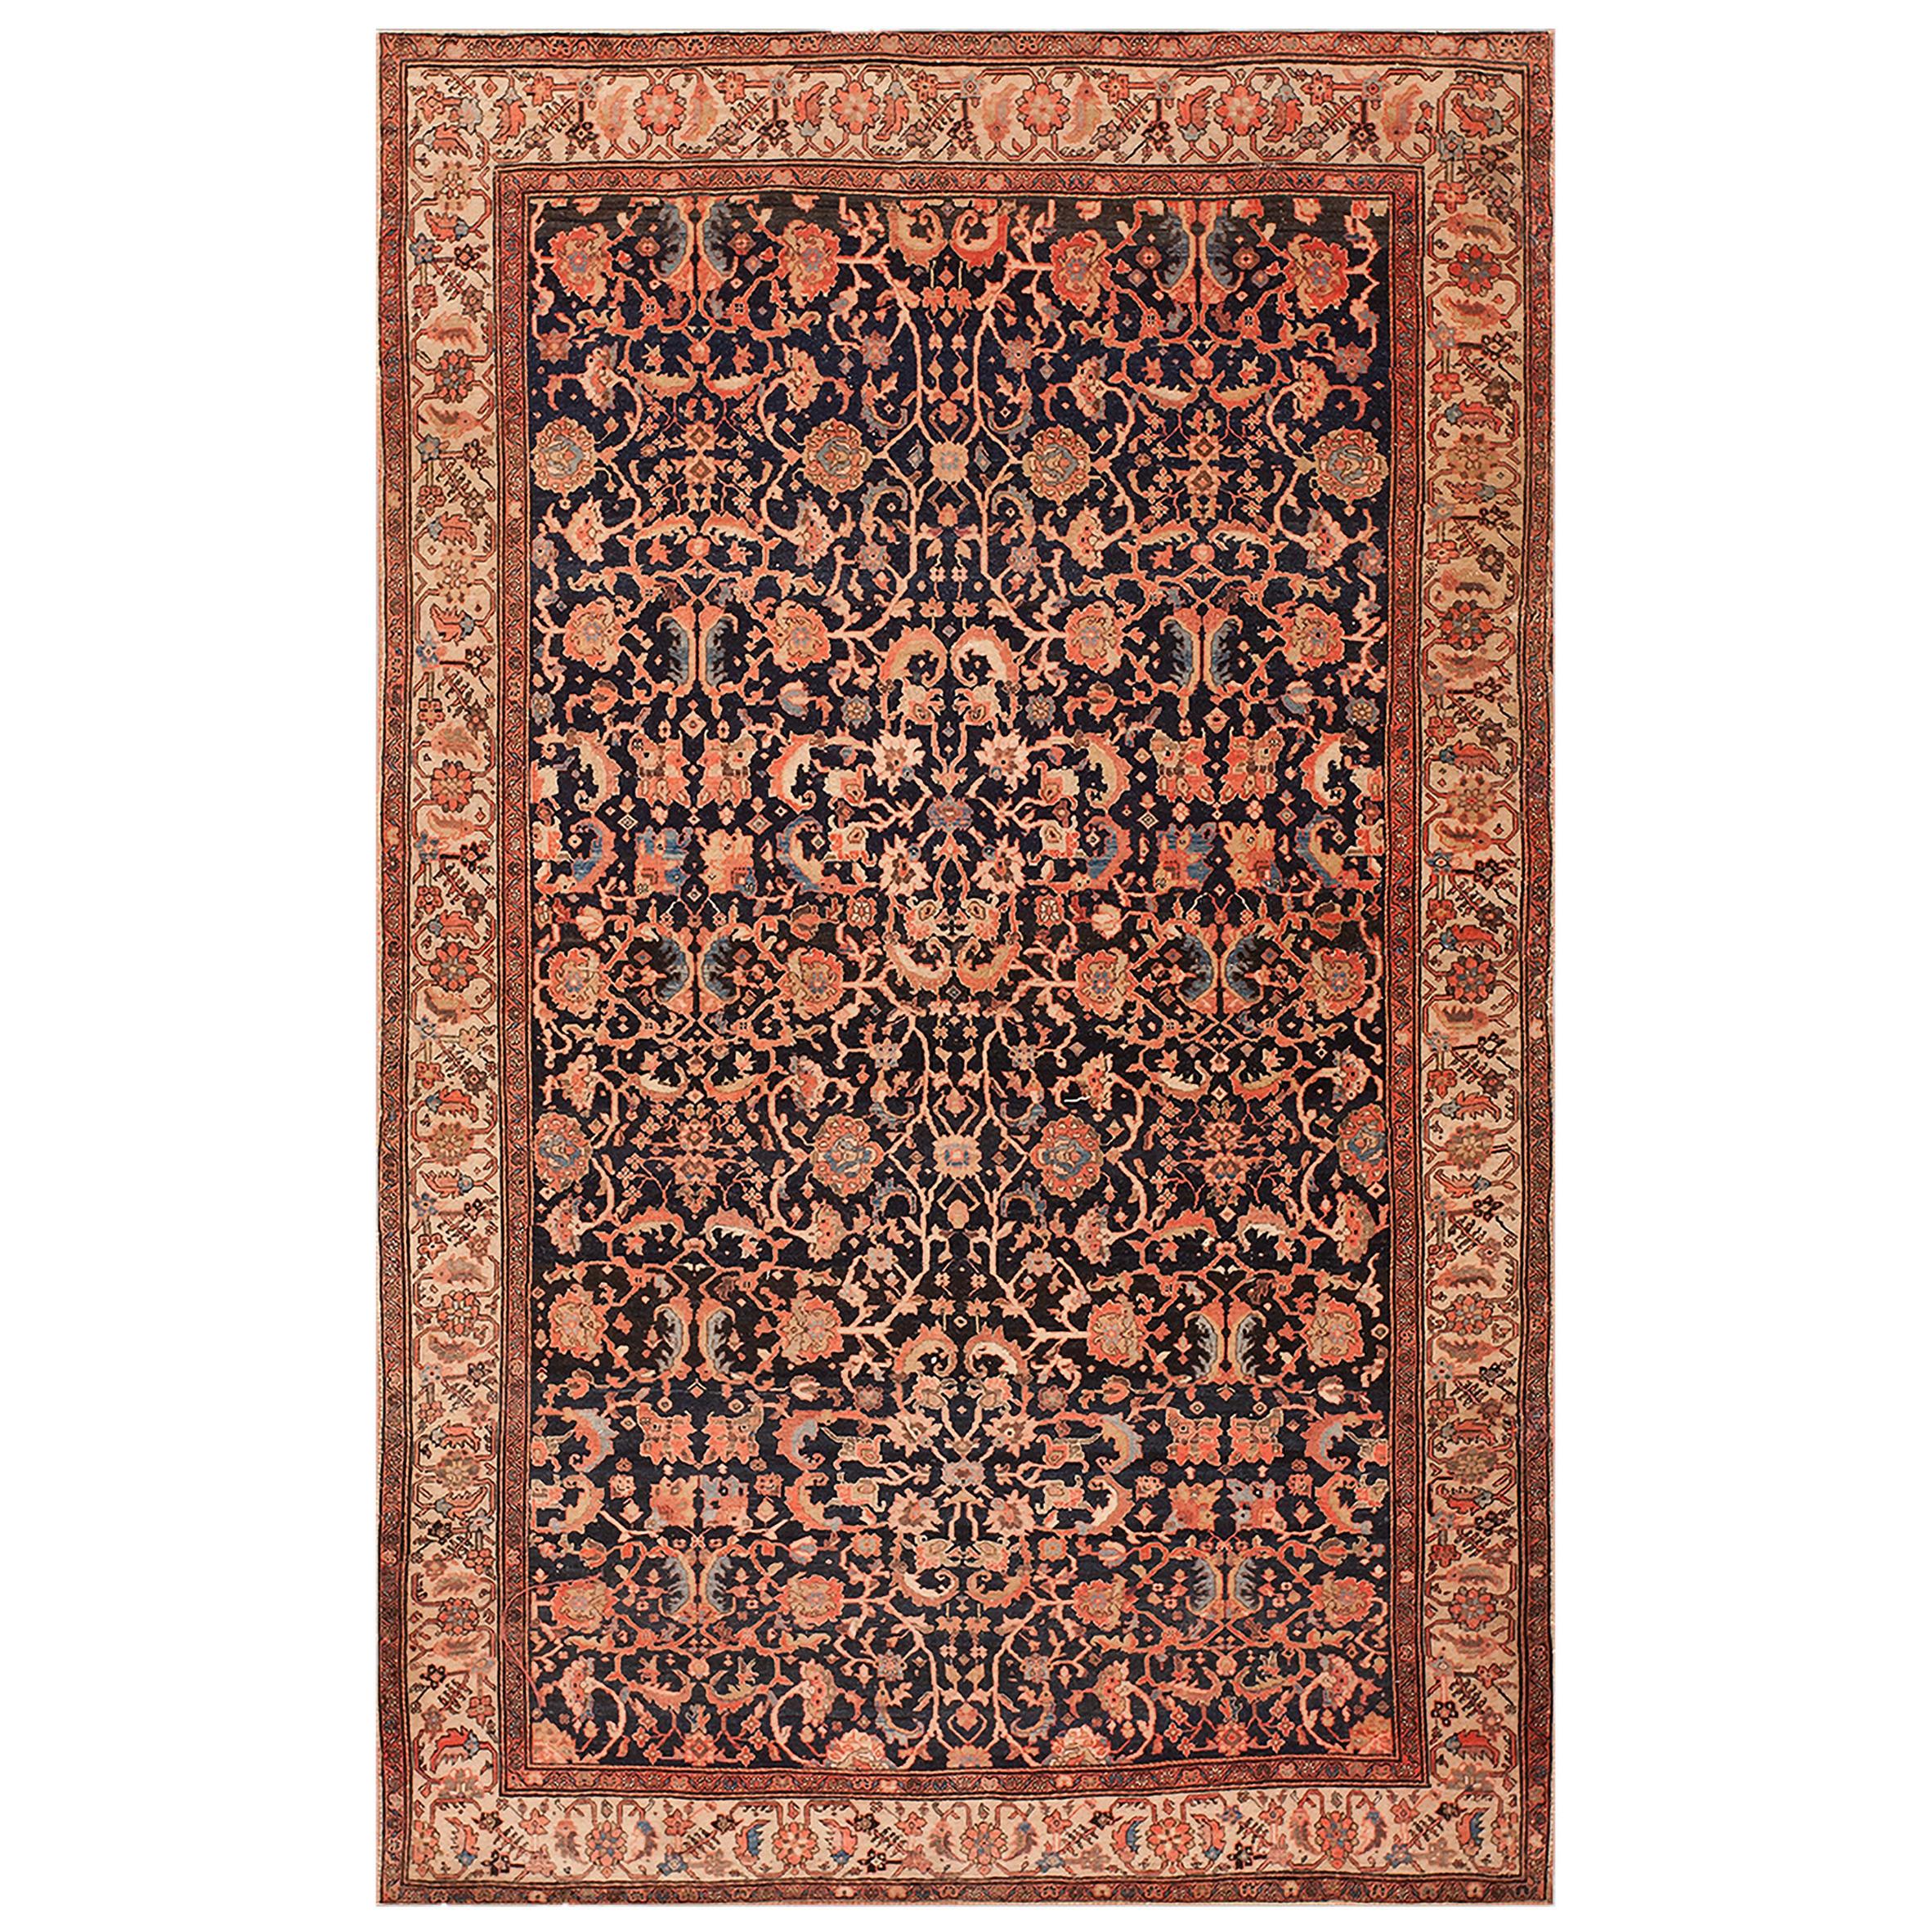 Early 20th Century Persian Sarouk Farahan Carpet ( 4'2" x 6'8" - 127 x 203 )